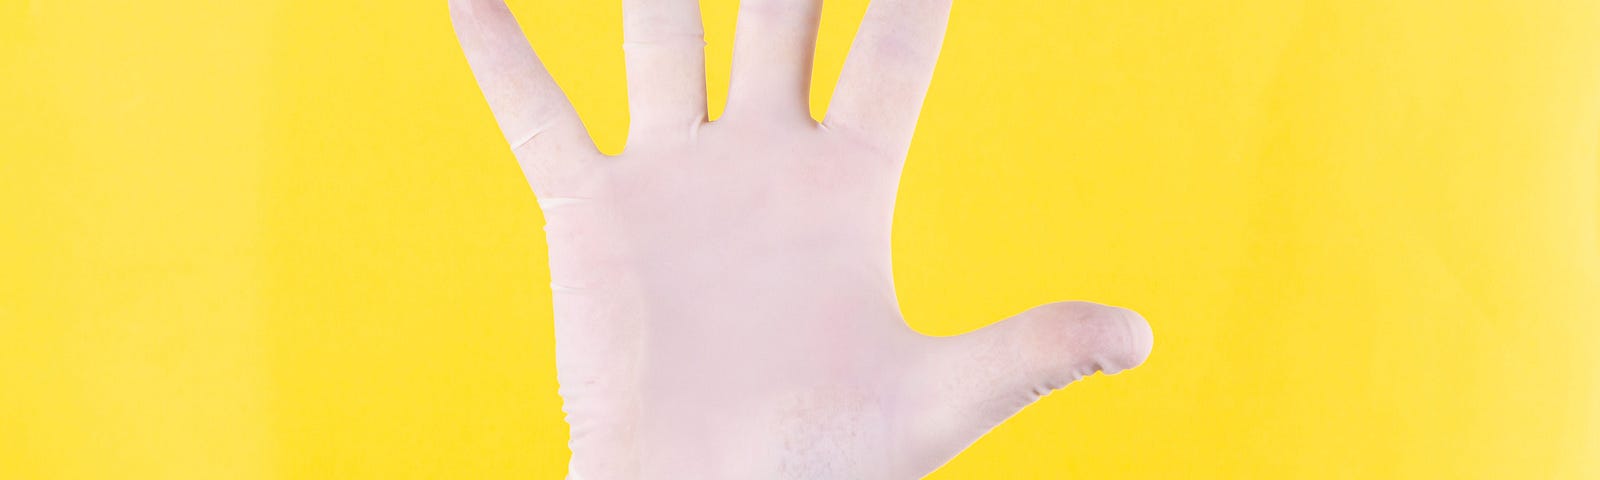 White glove on yellow background